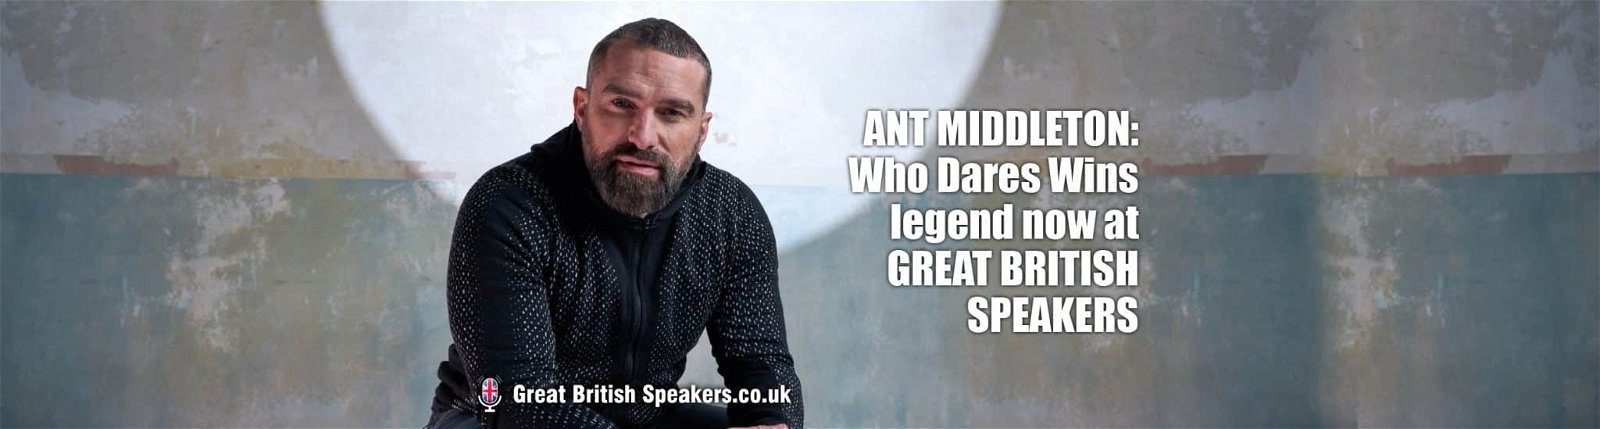 Ant Middleton Who Dares Wins SAS motivational speaker at agent Great British Speakers